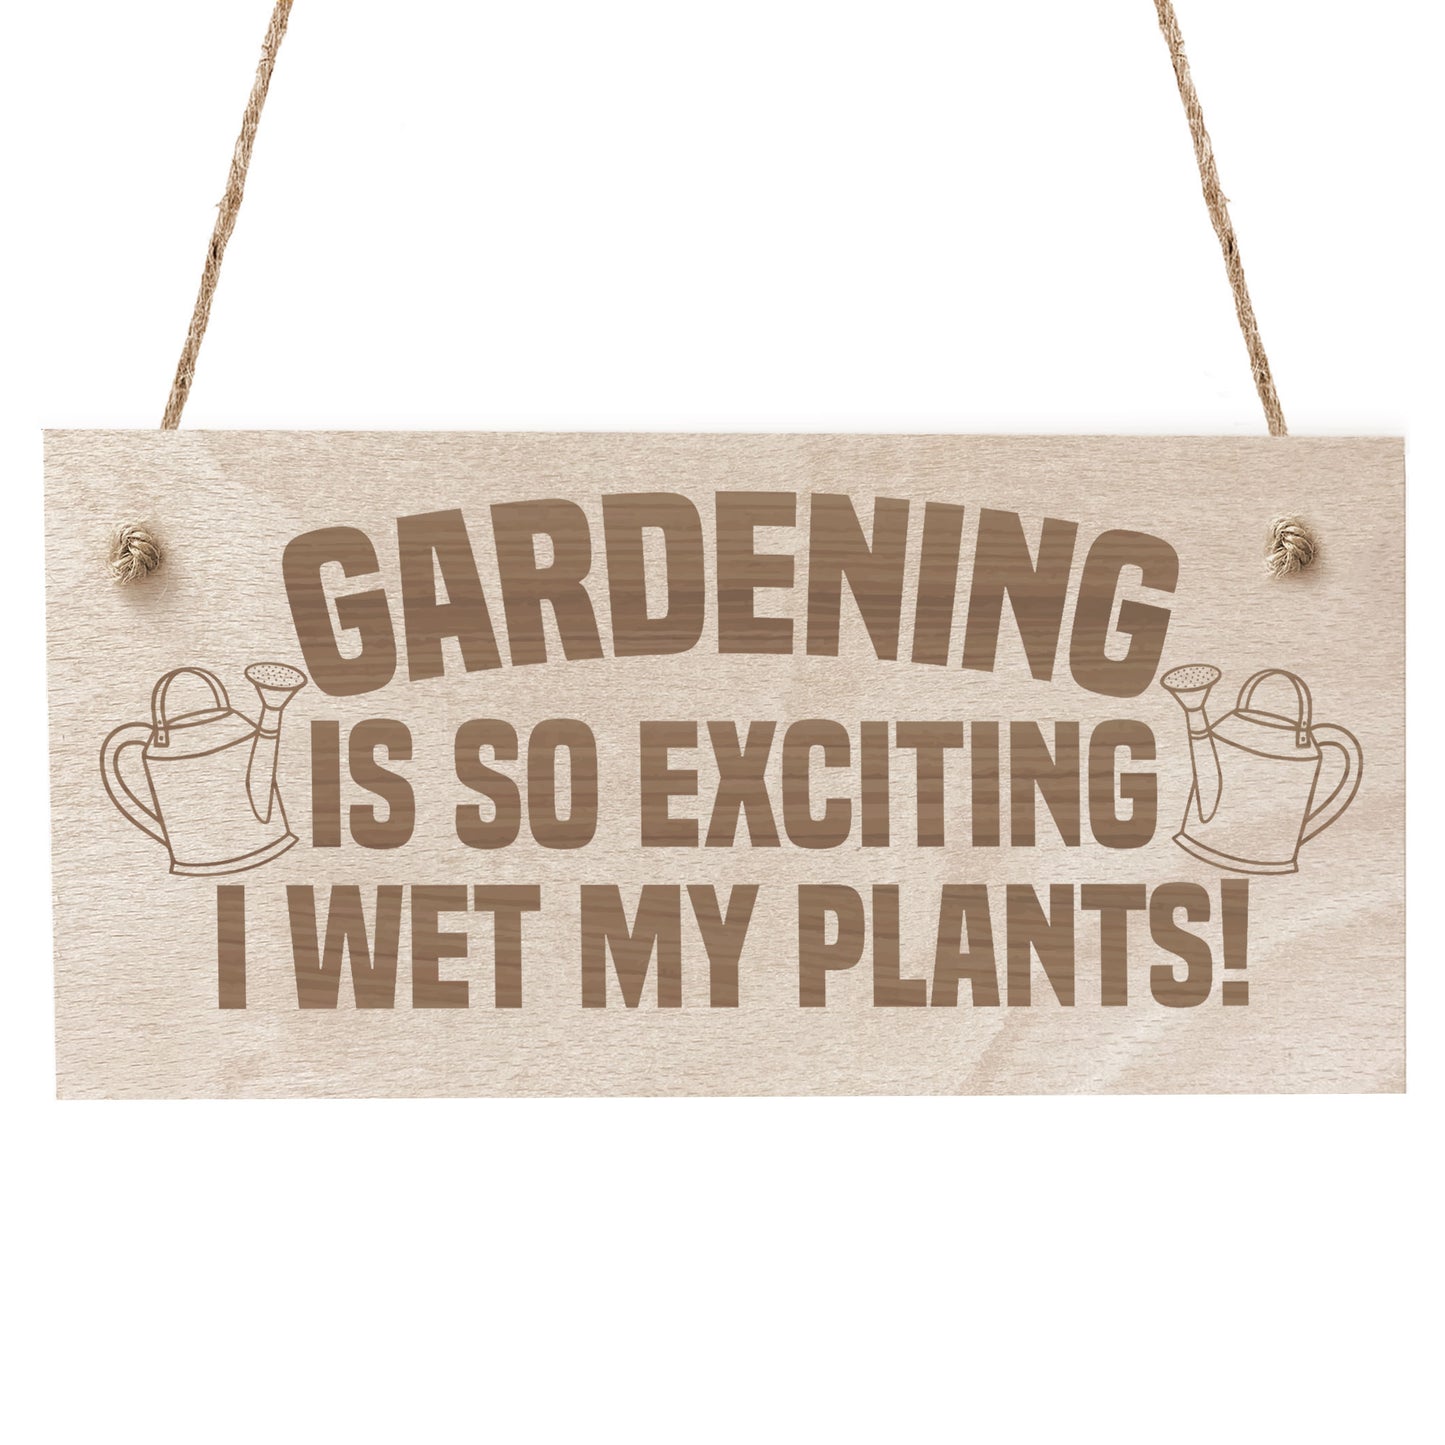 Funny Garden Plaque Novelty Summer House Garden Shed Sign